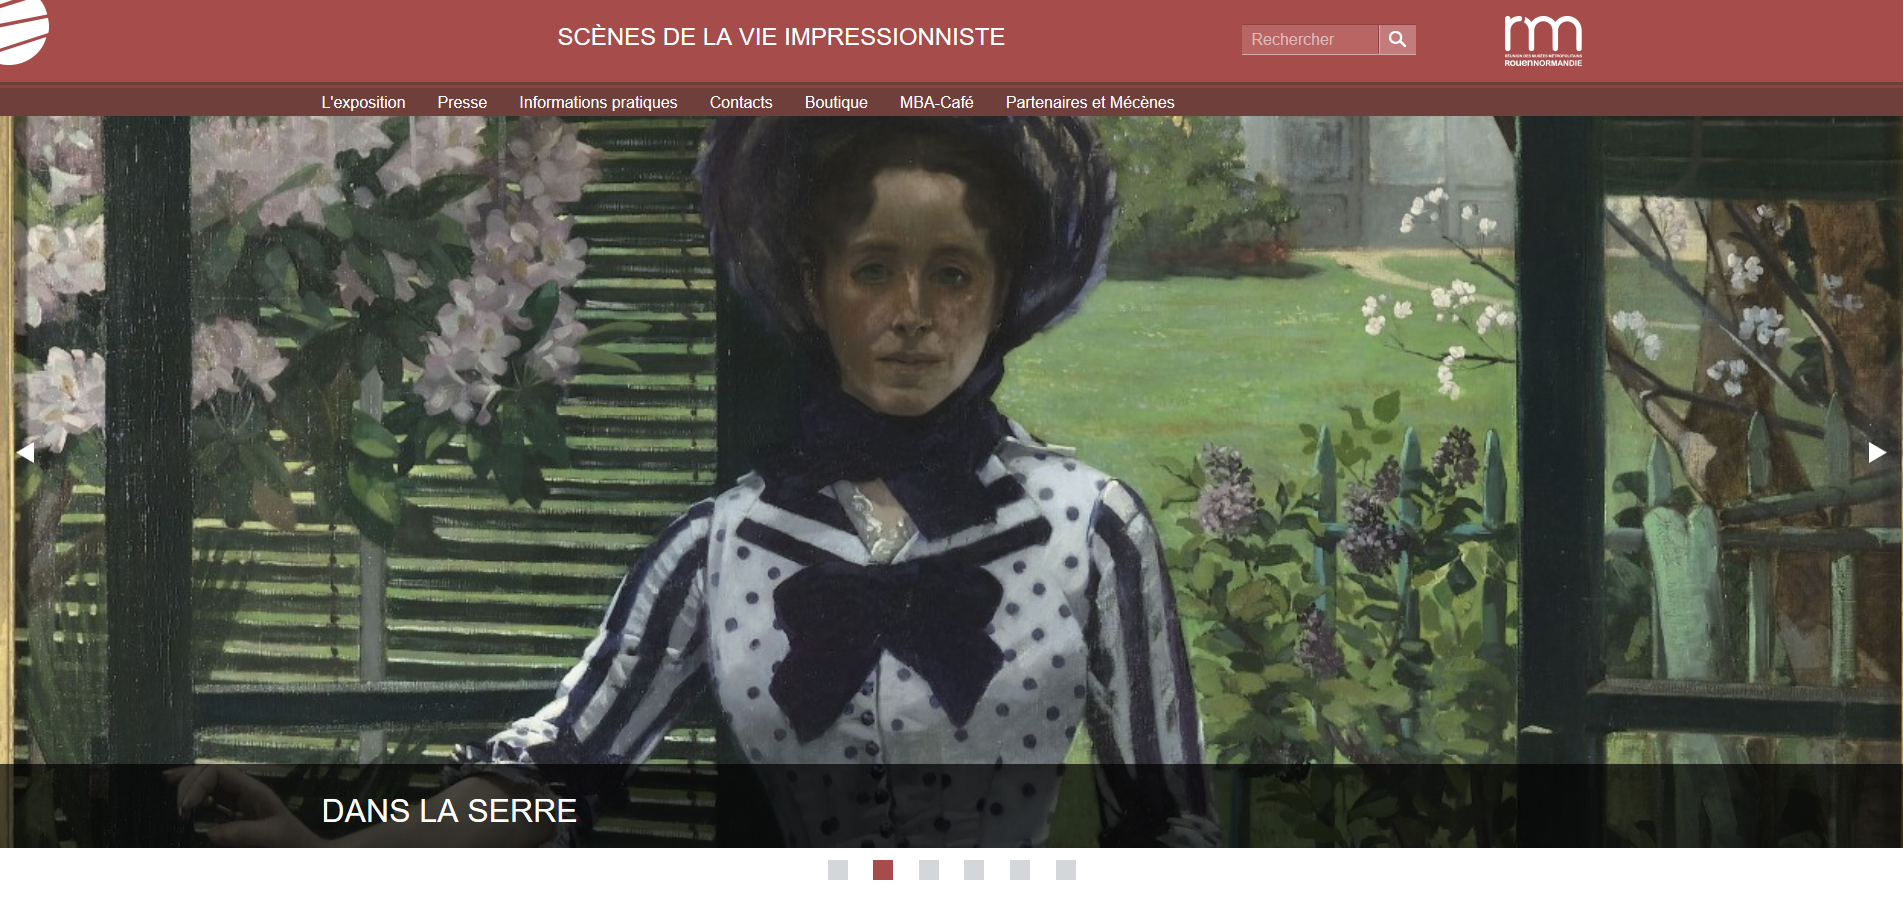 FireShot Screen Capture #181 - 'Scènes de la vie impressionniste' - scenesdelavieimpressionniste_fr_fr